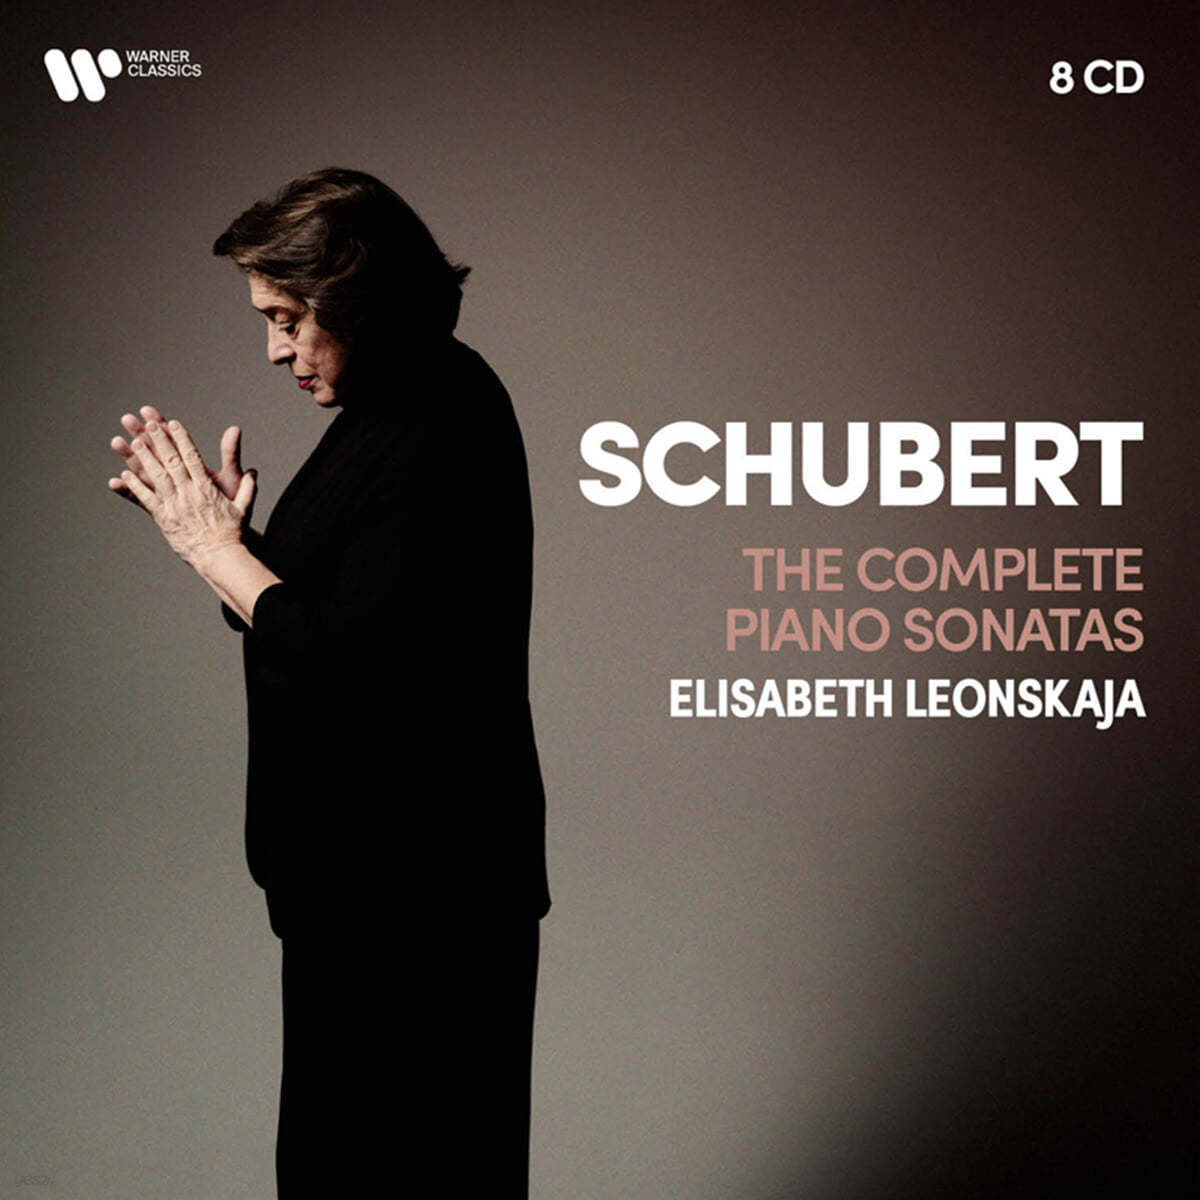 Elisabeth Leonskaja 슈베르트: 피아노 소나타 전곡집 - 엘리자베스 레온스카야 (Schubert: The Complete Piano Sonatas)